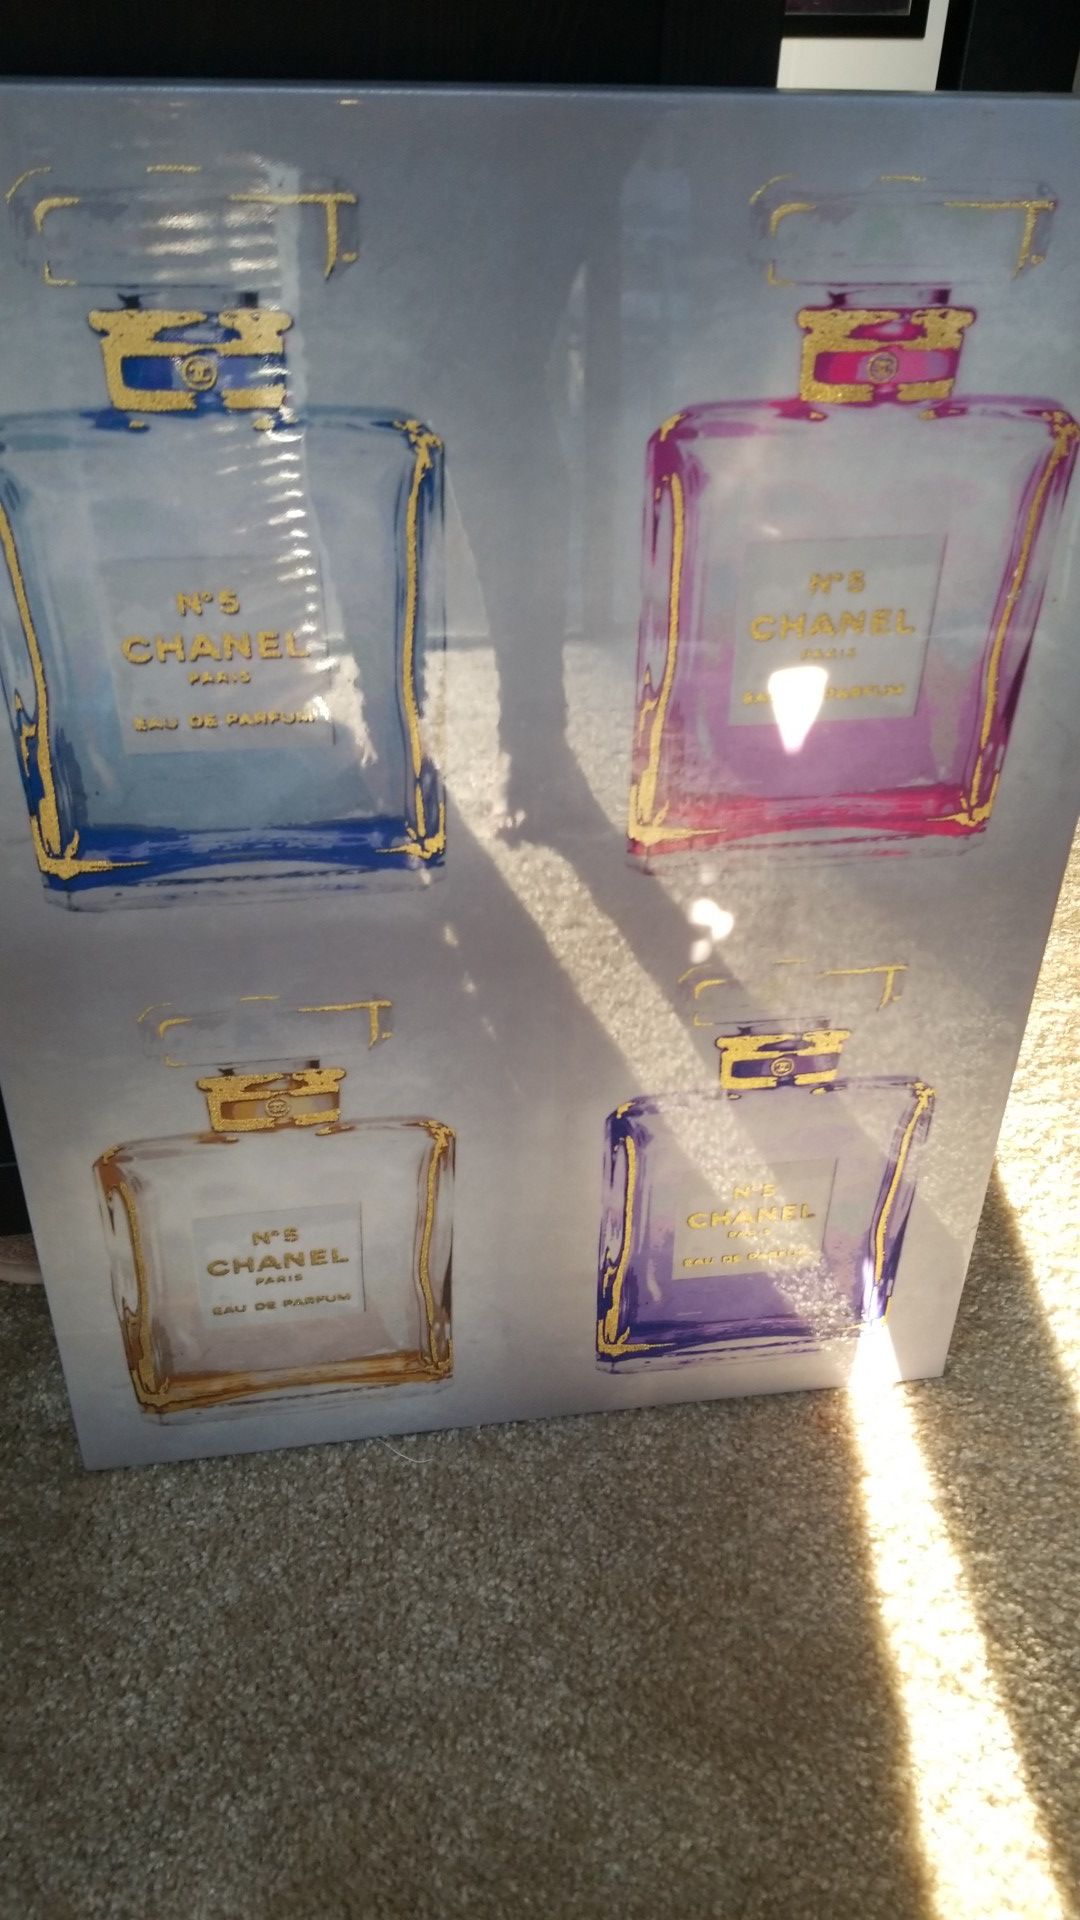 Perfume ChaNel no. 5 frame